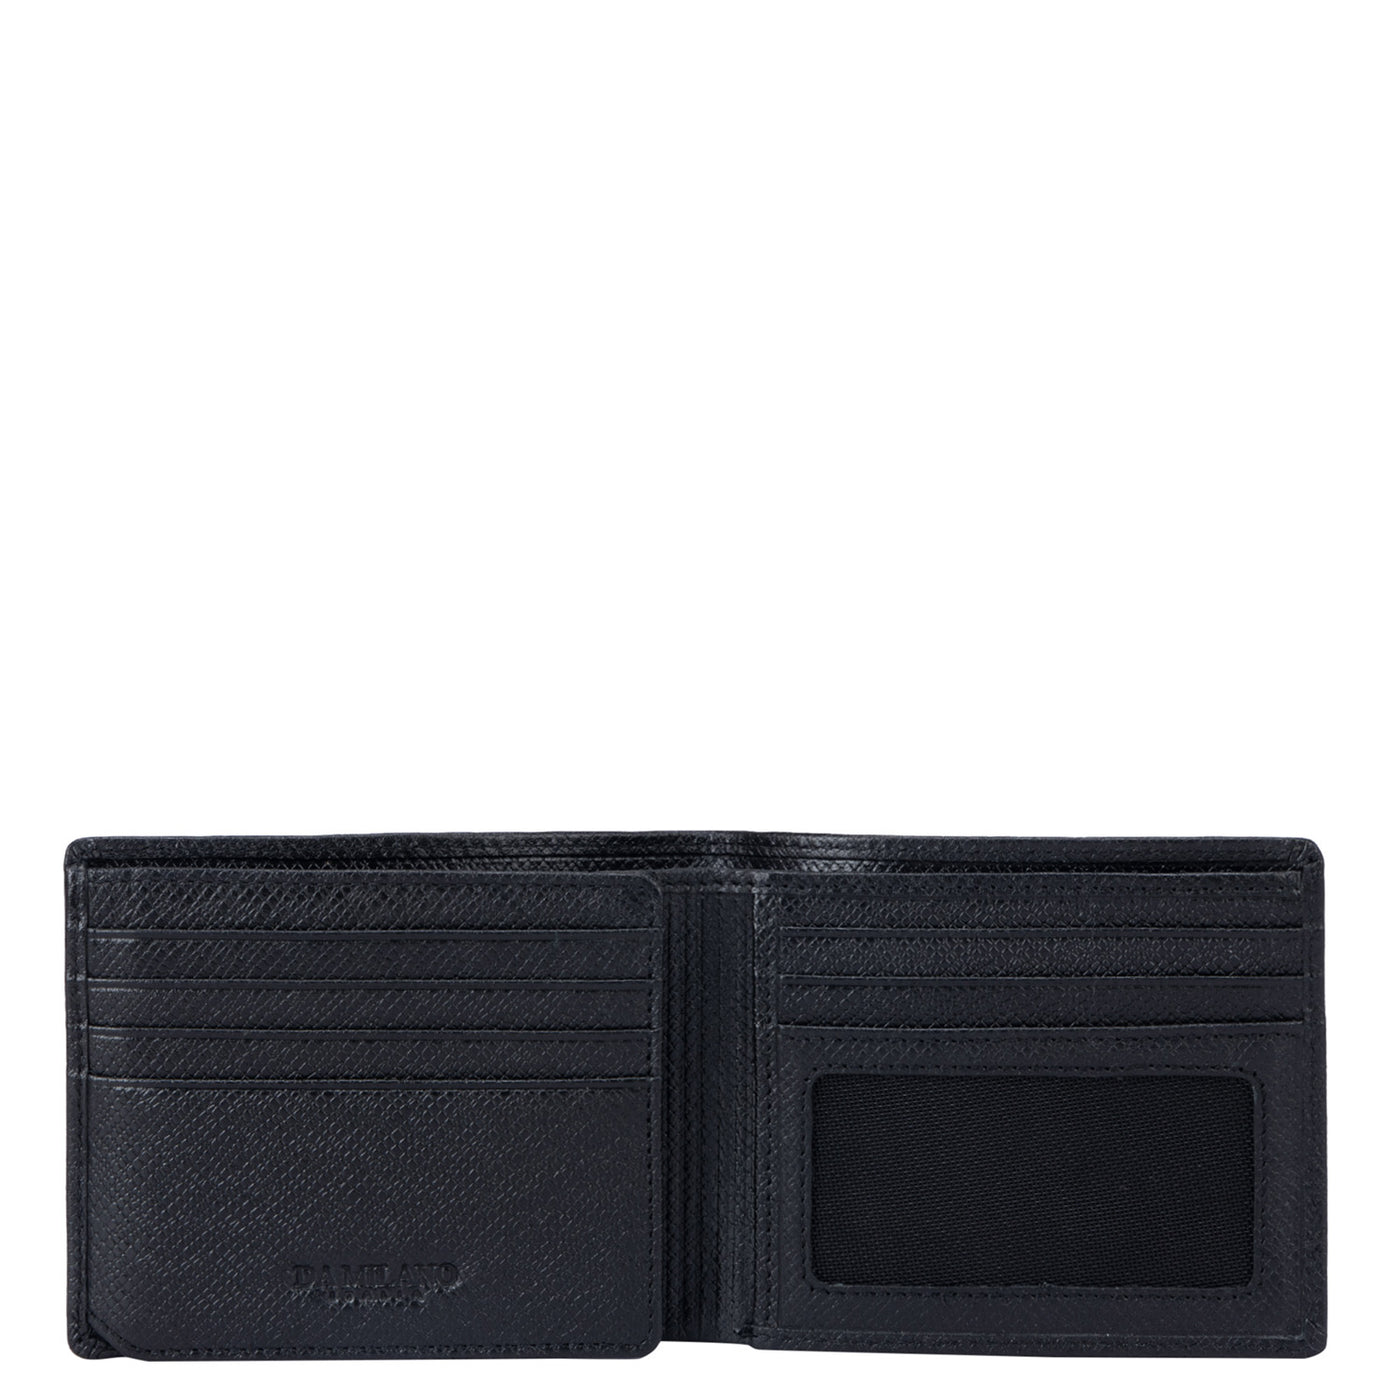 Black Franzy Leather Mens & Ladies Wallet Gift Set